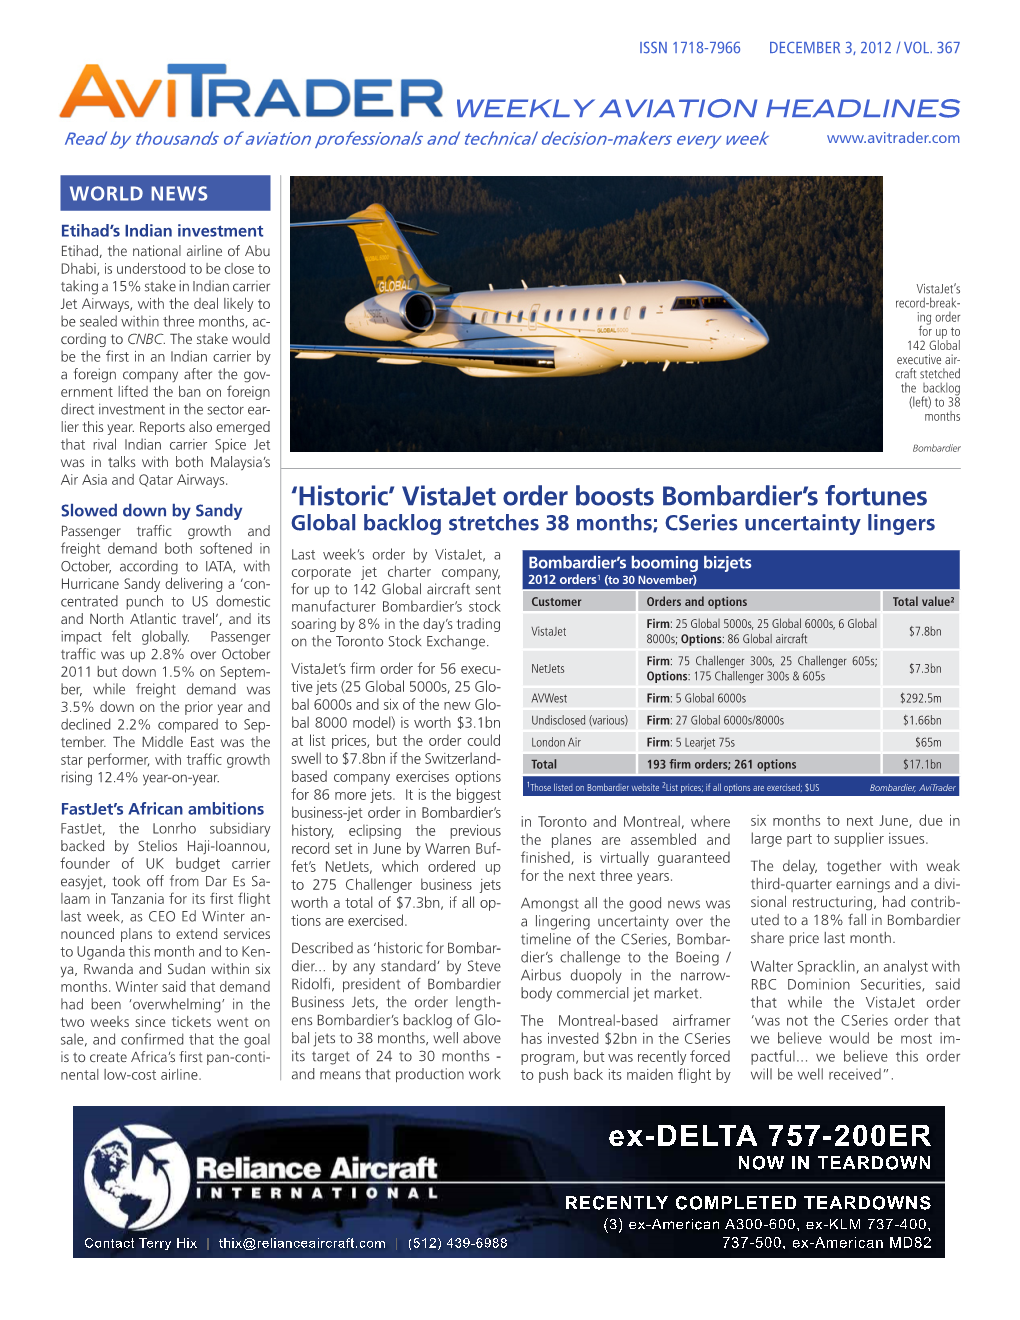 Vistajet Order Boosts Bombardier's Fortunes